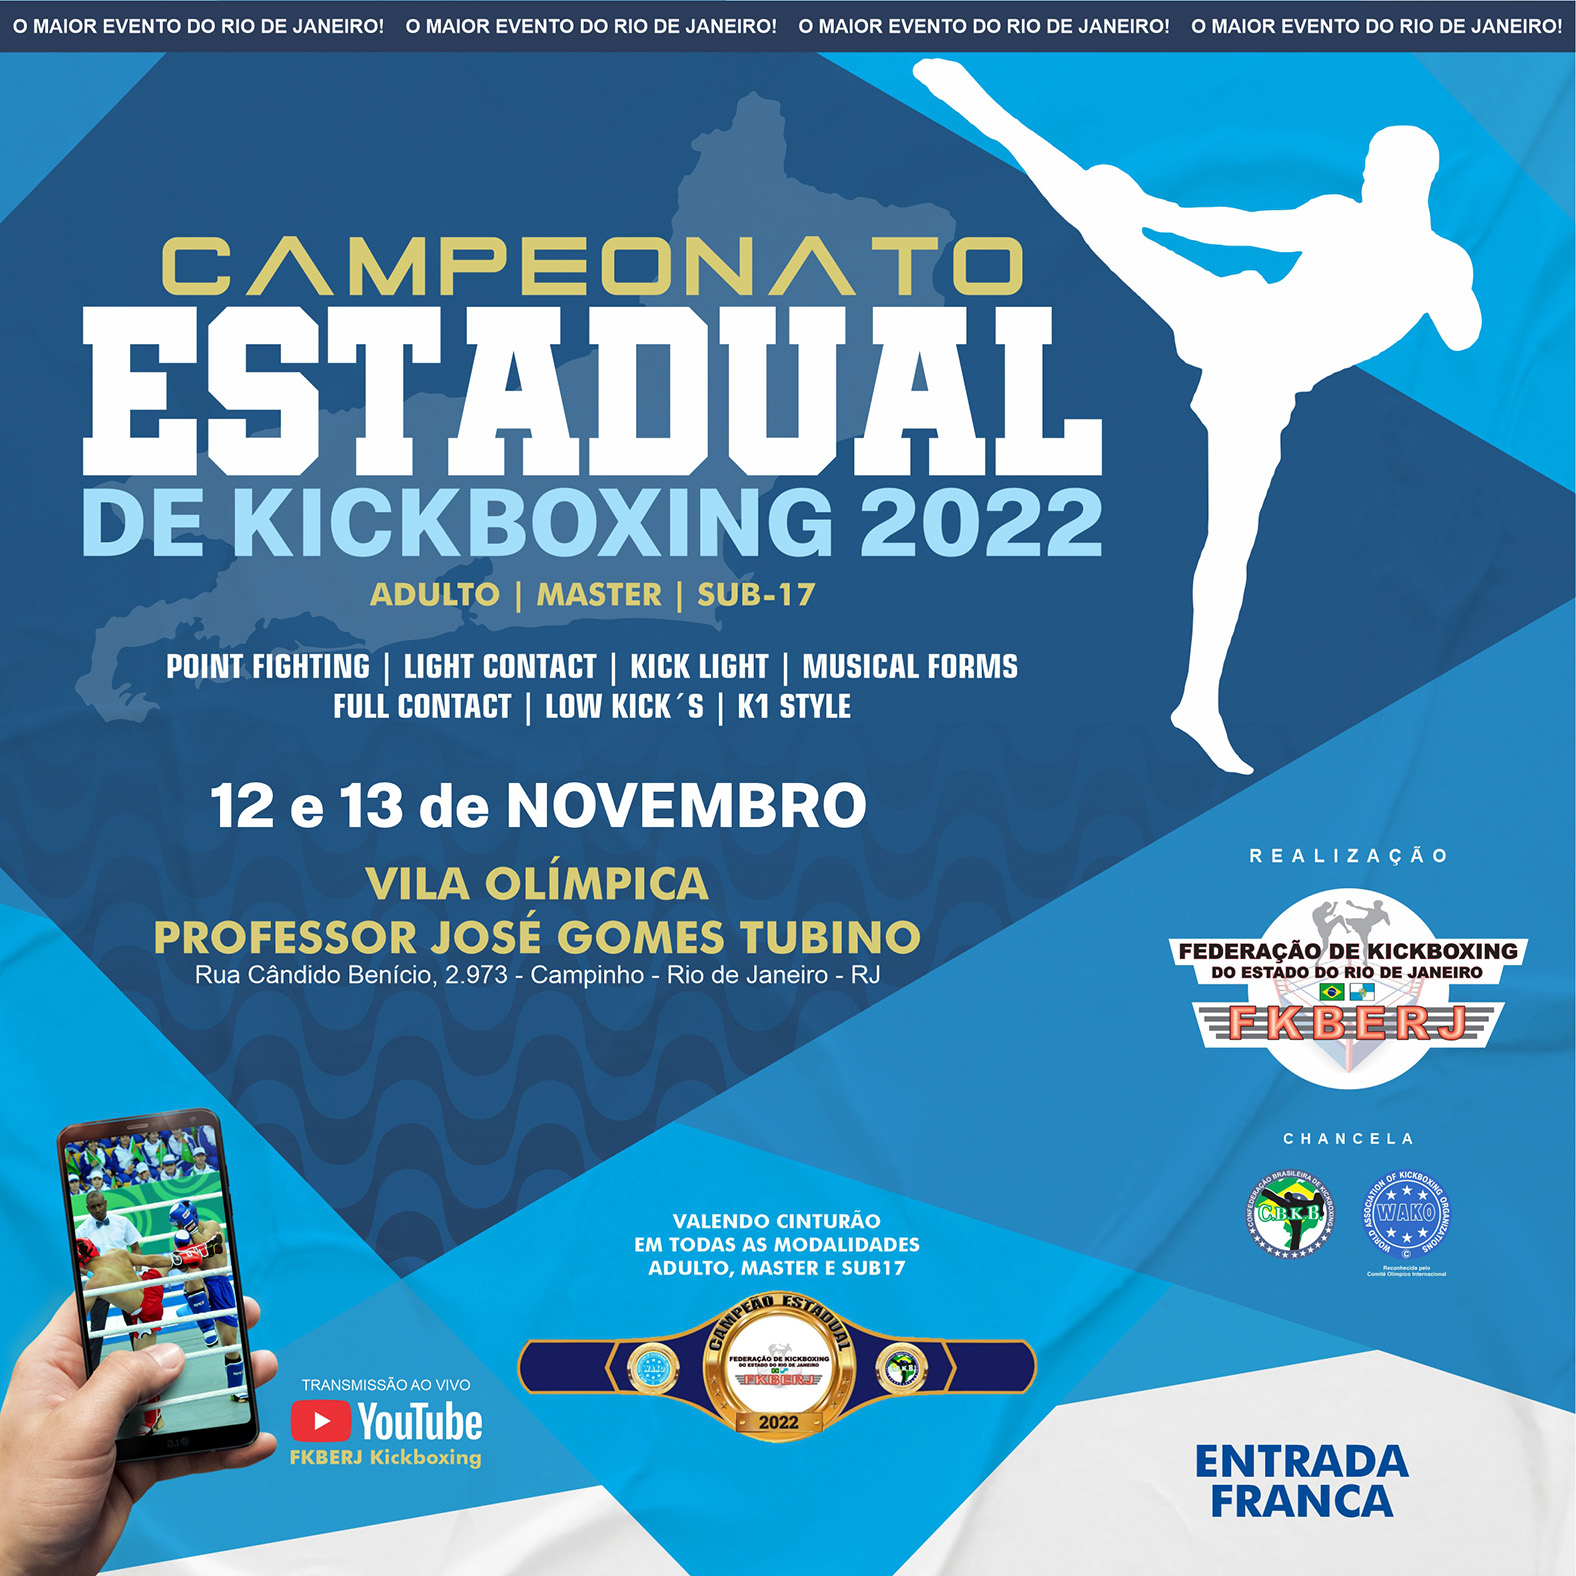 Campeonato Estadual de Kickboxing 2022